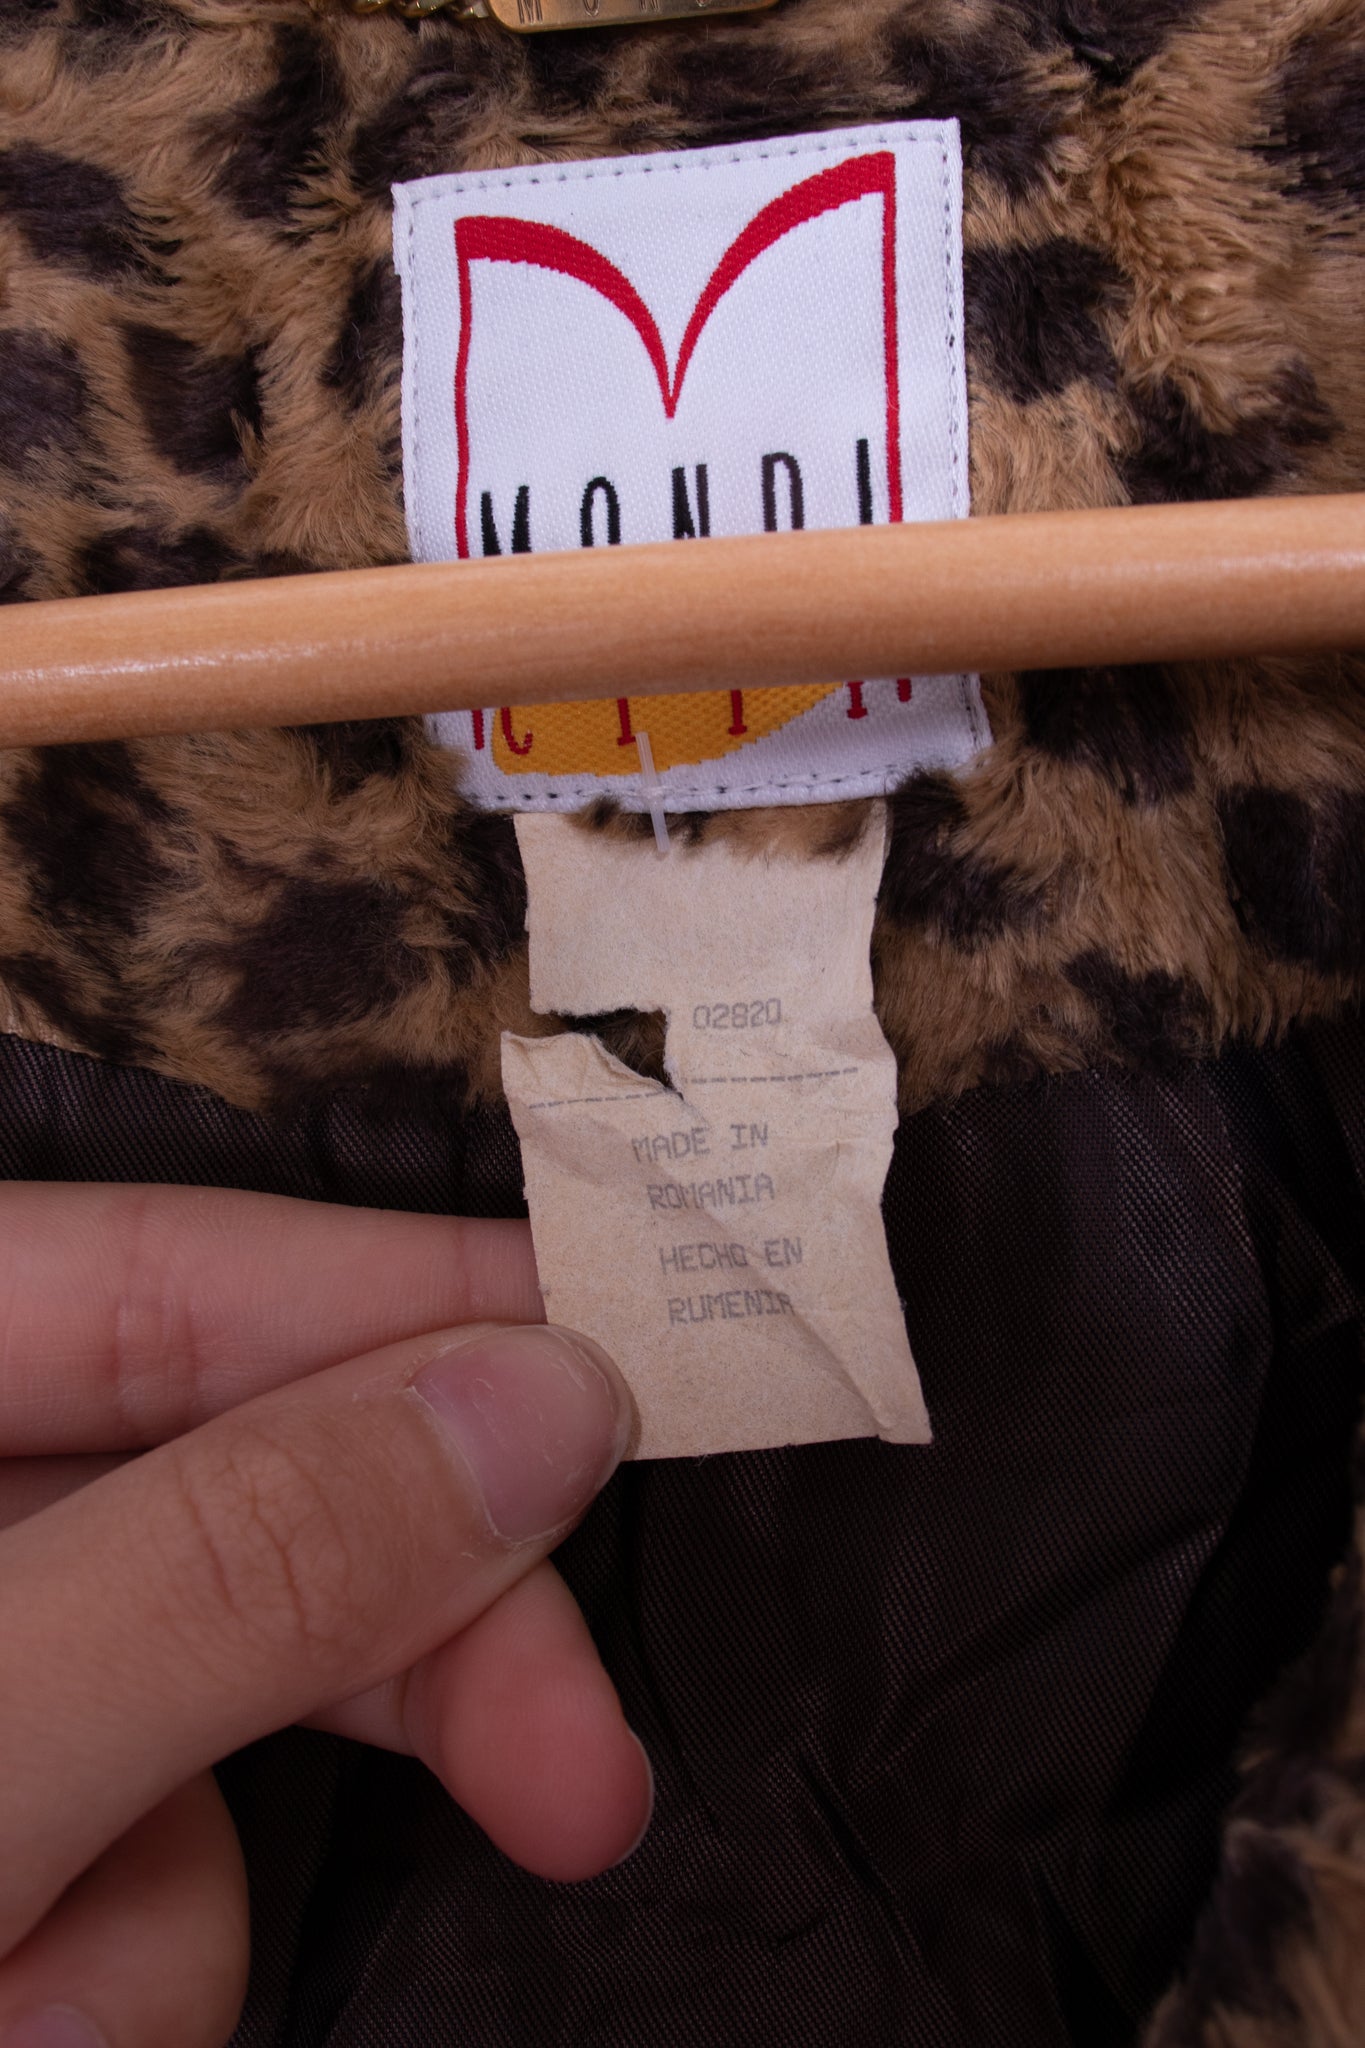 80s Monoi Cheetah Print Fluff Jacket